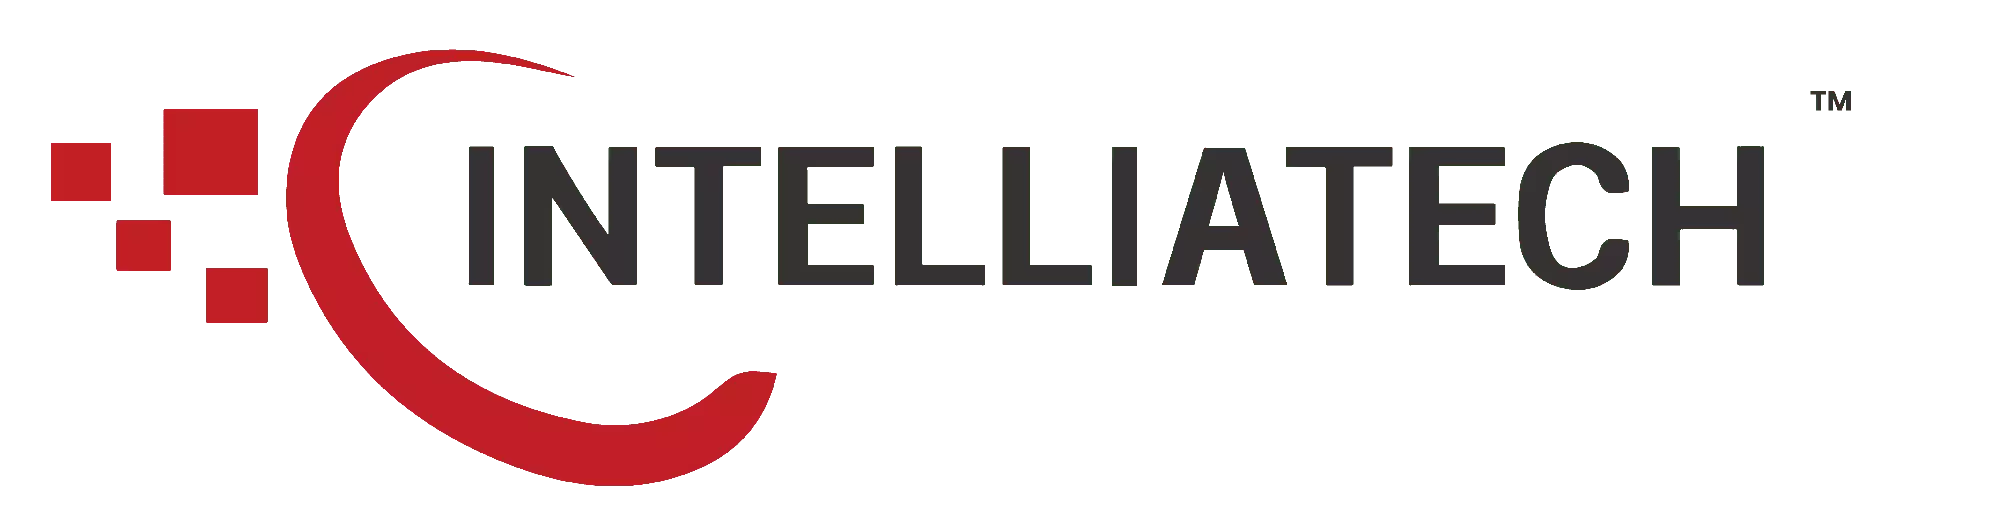 Intelliatech logo image with trade mark